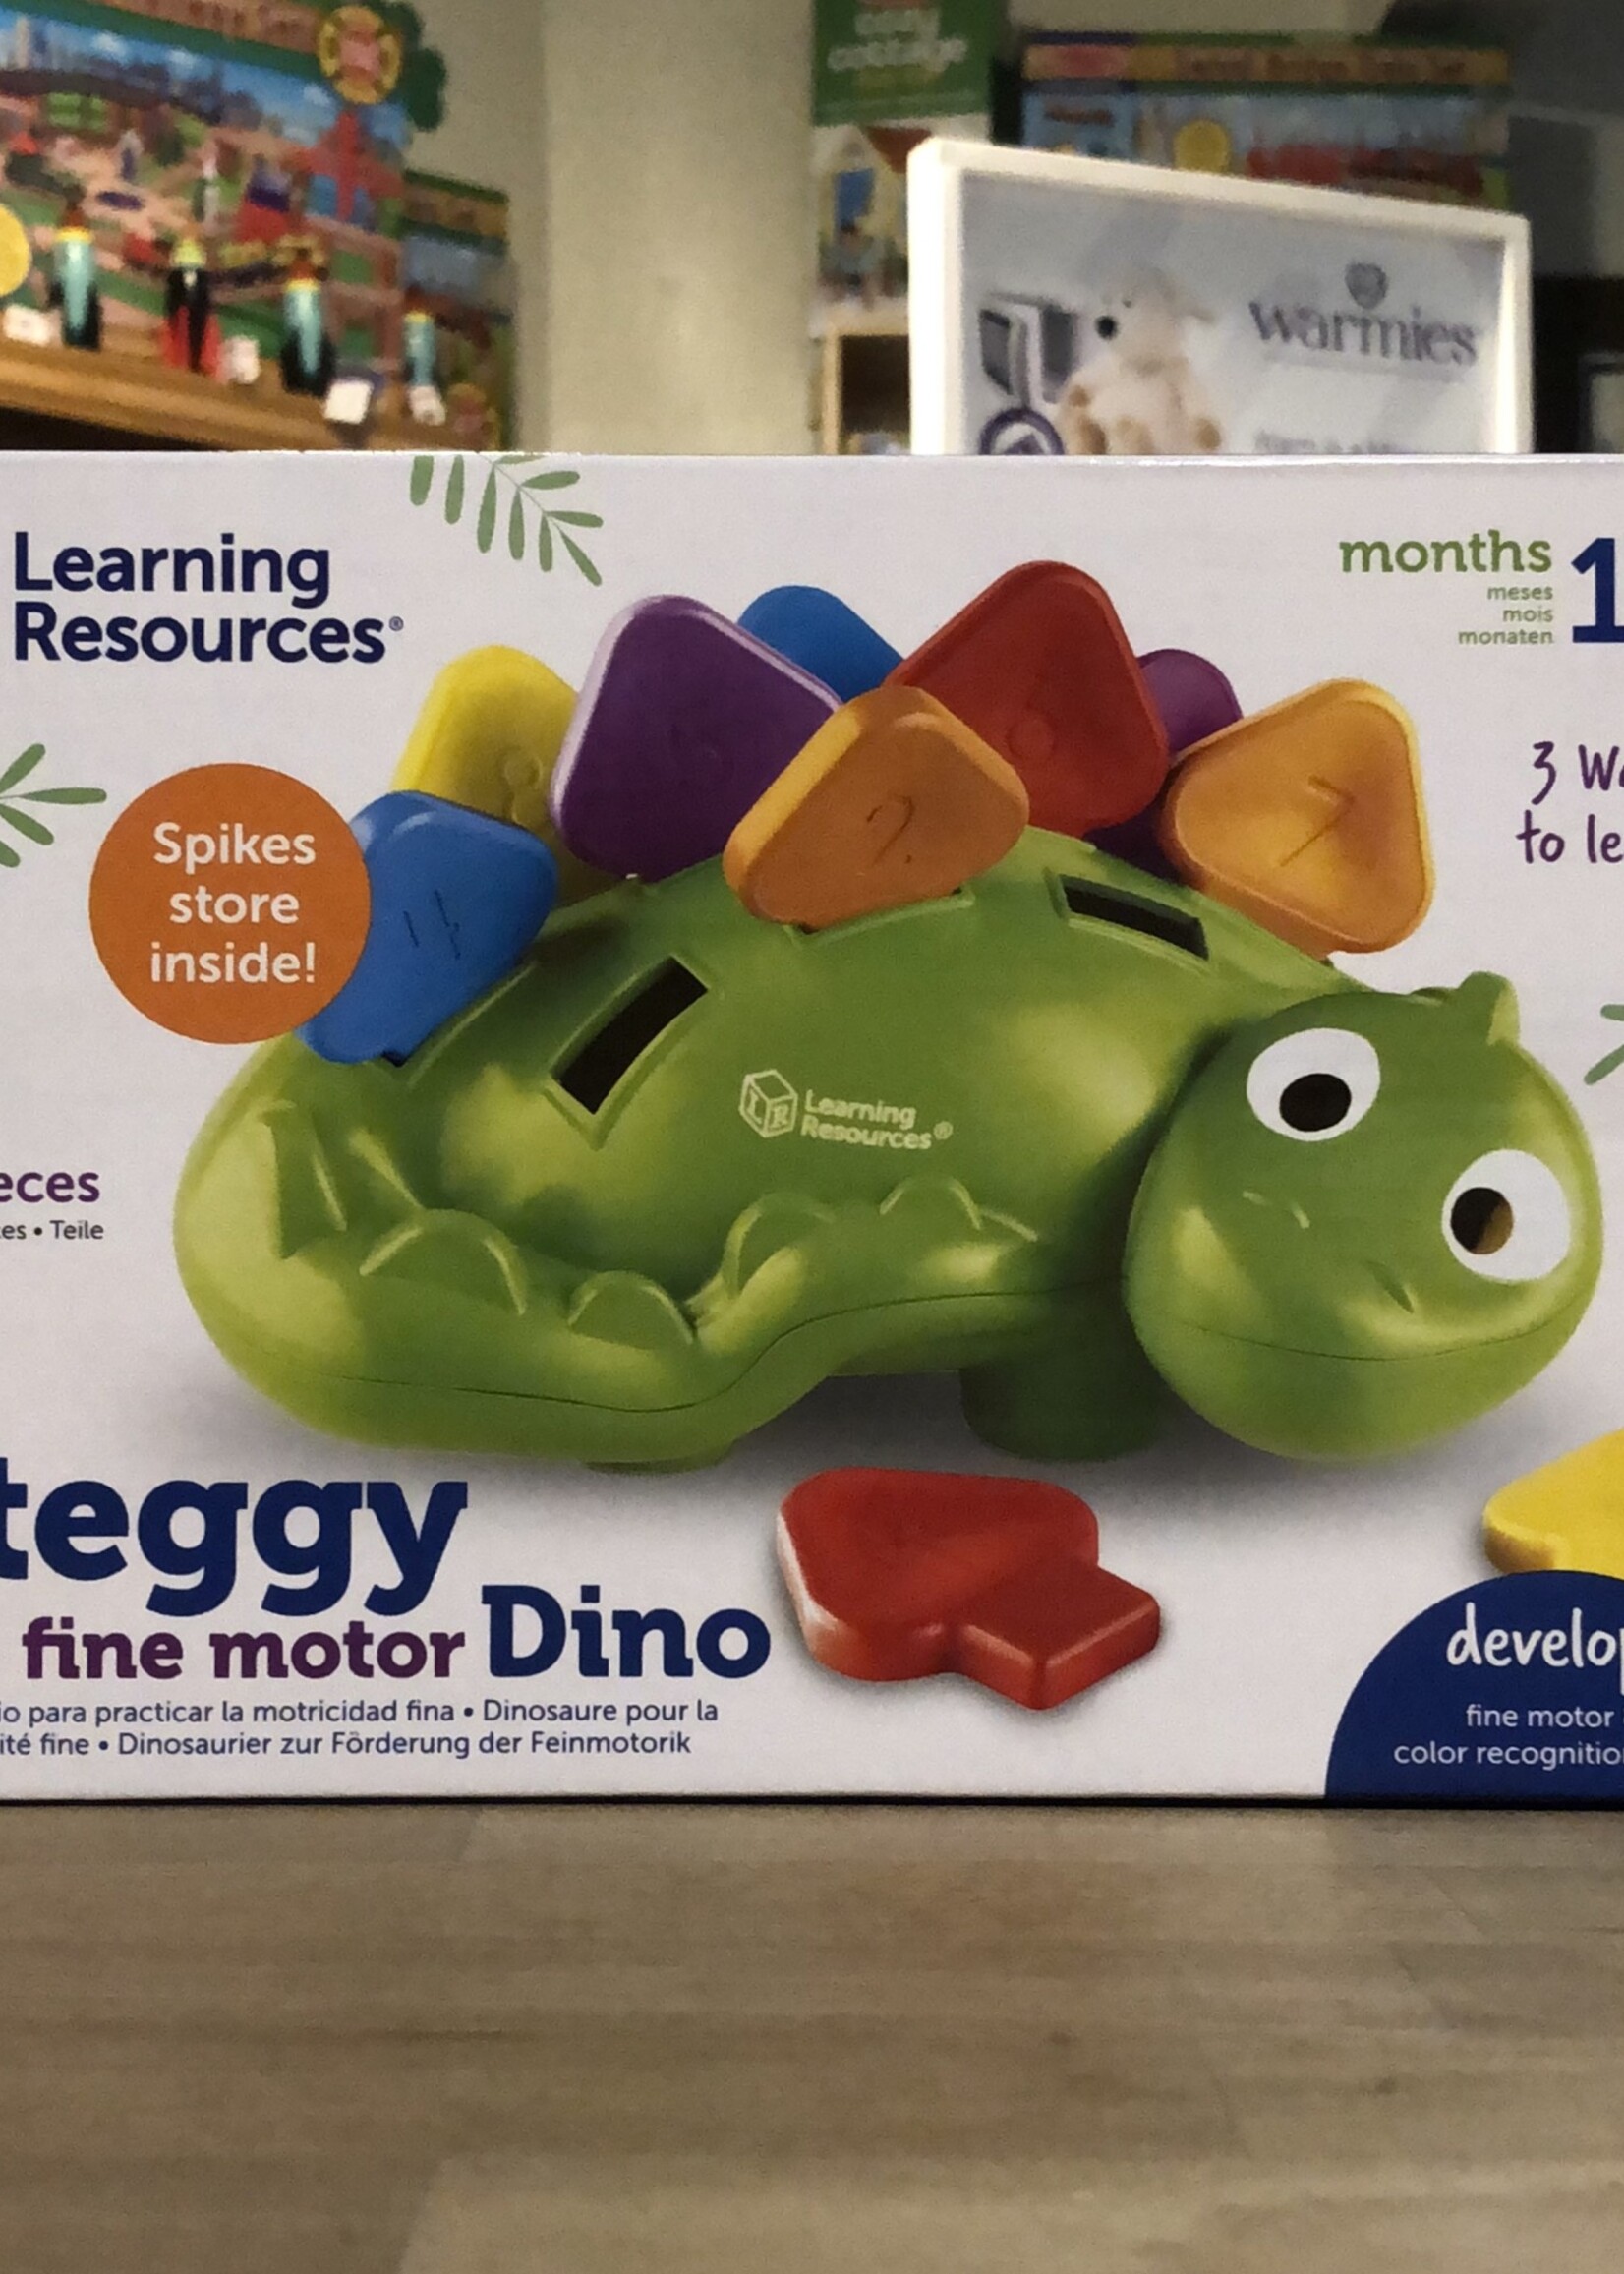 Steggy the Fine Motor Dino